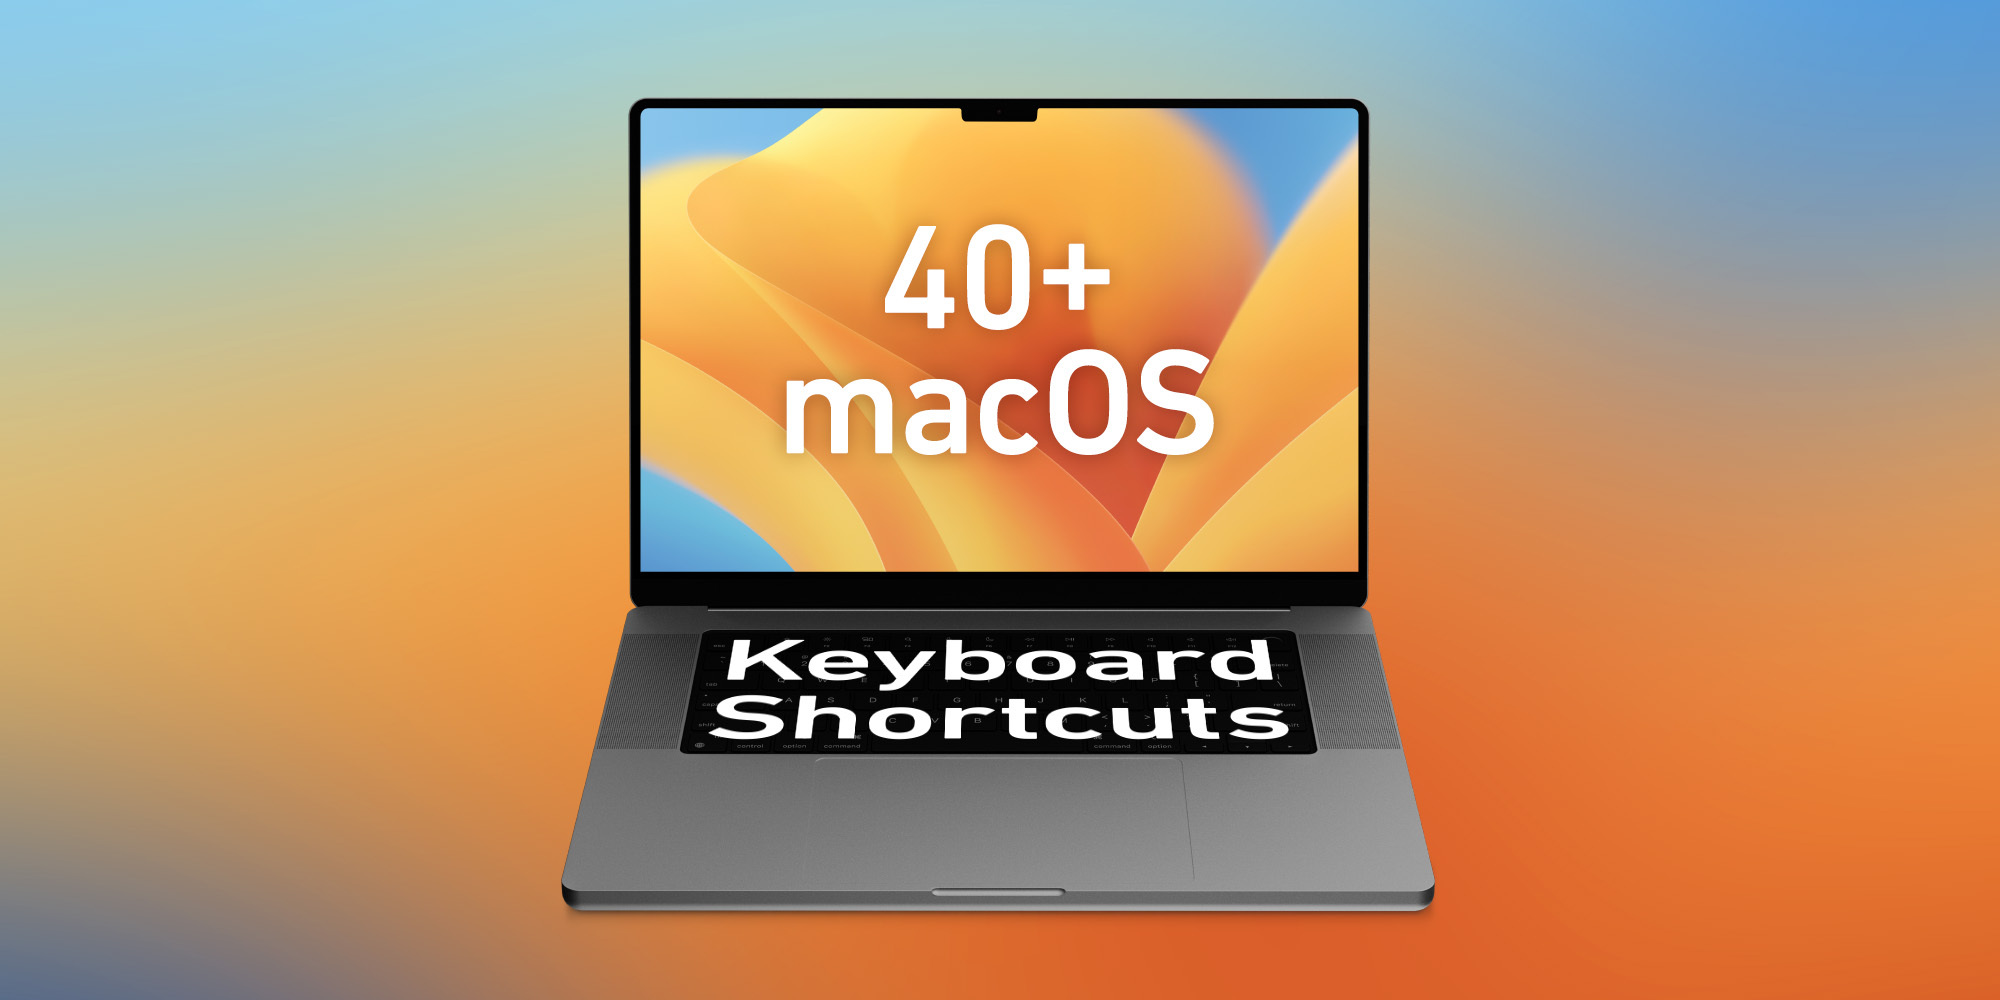 macbook pro keyboard shortcuts